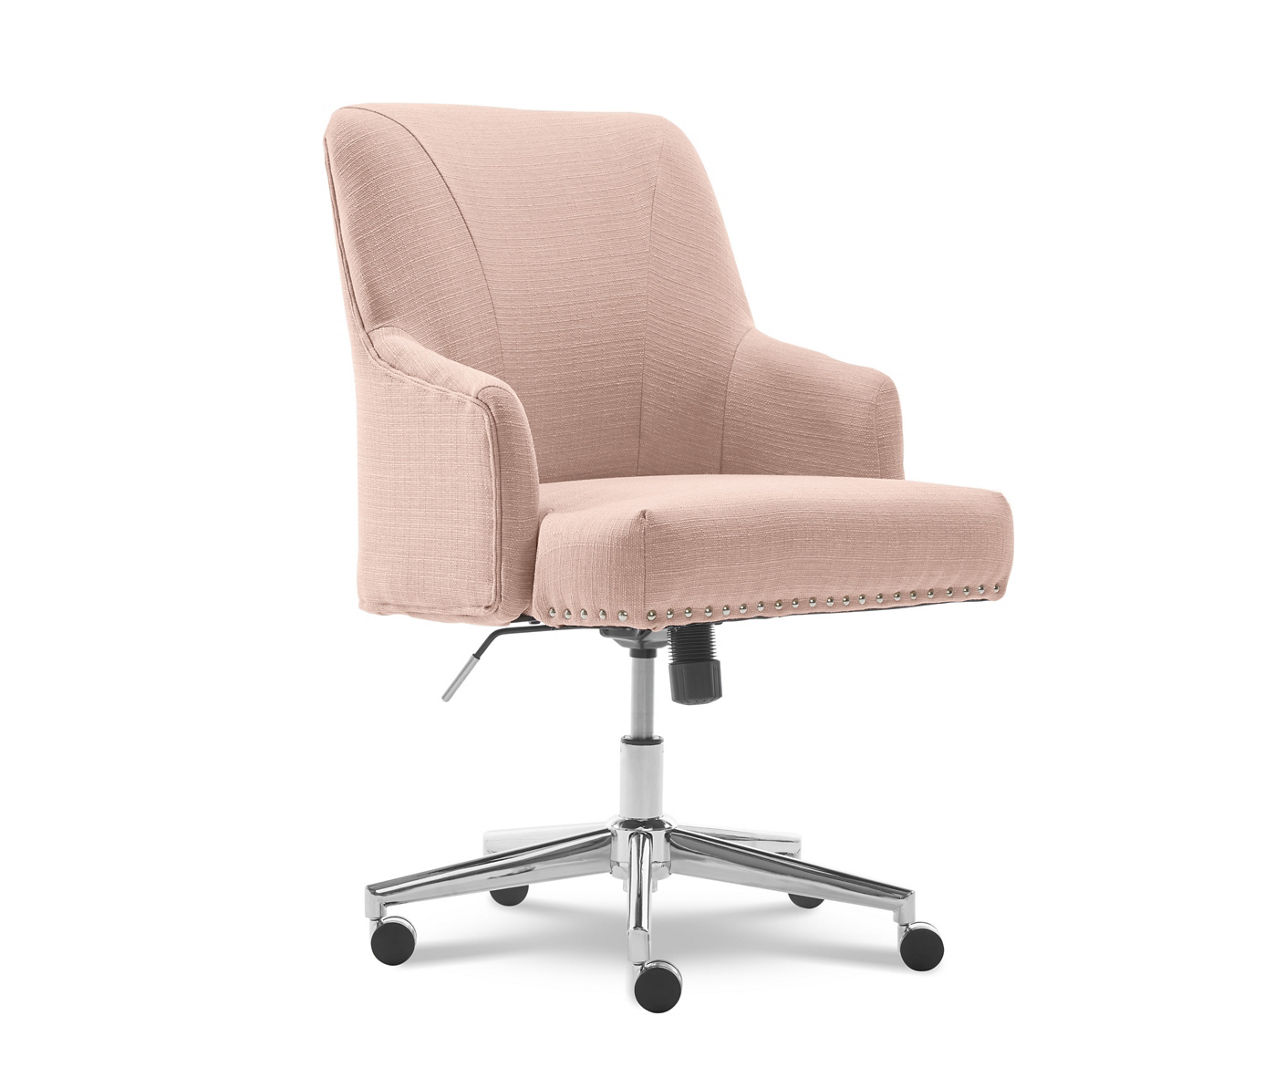 Serta Leighton Blush Pink Memory Foam Fabric Office Chair | Big Lots